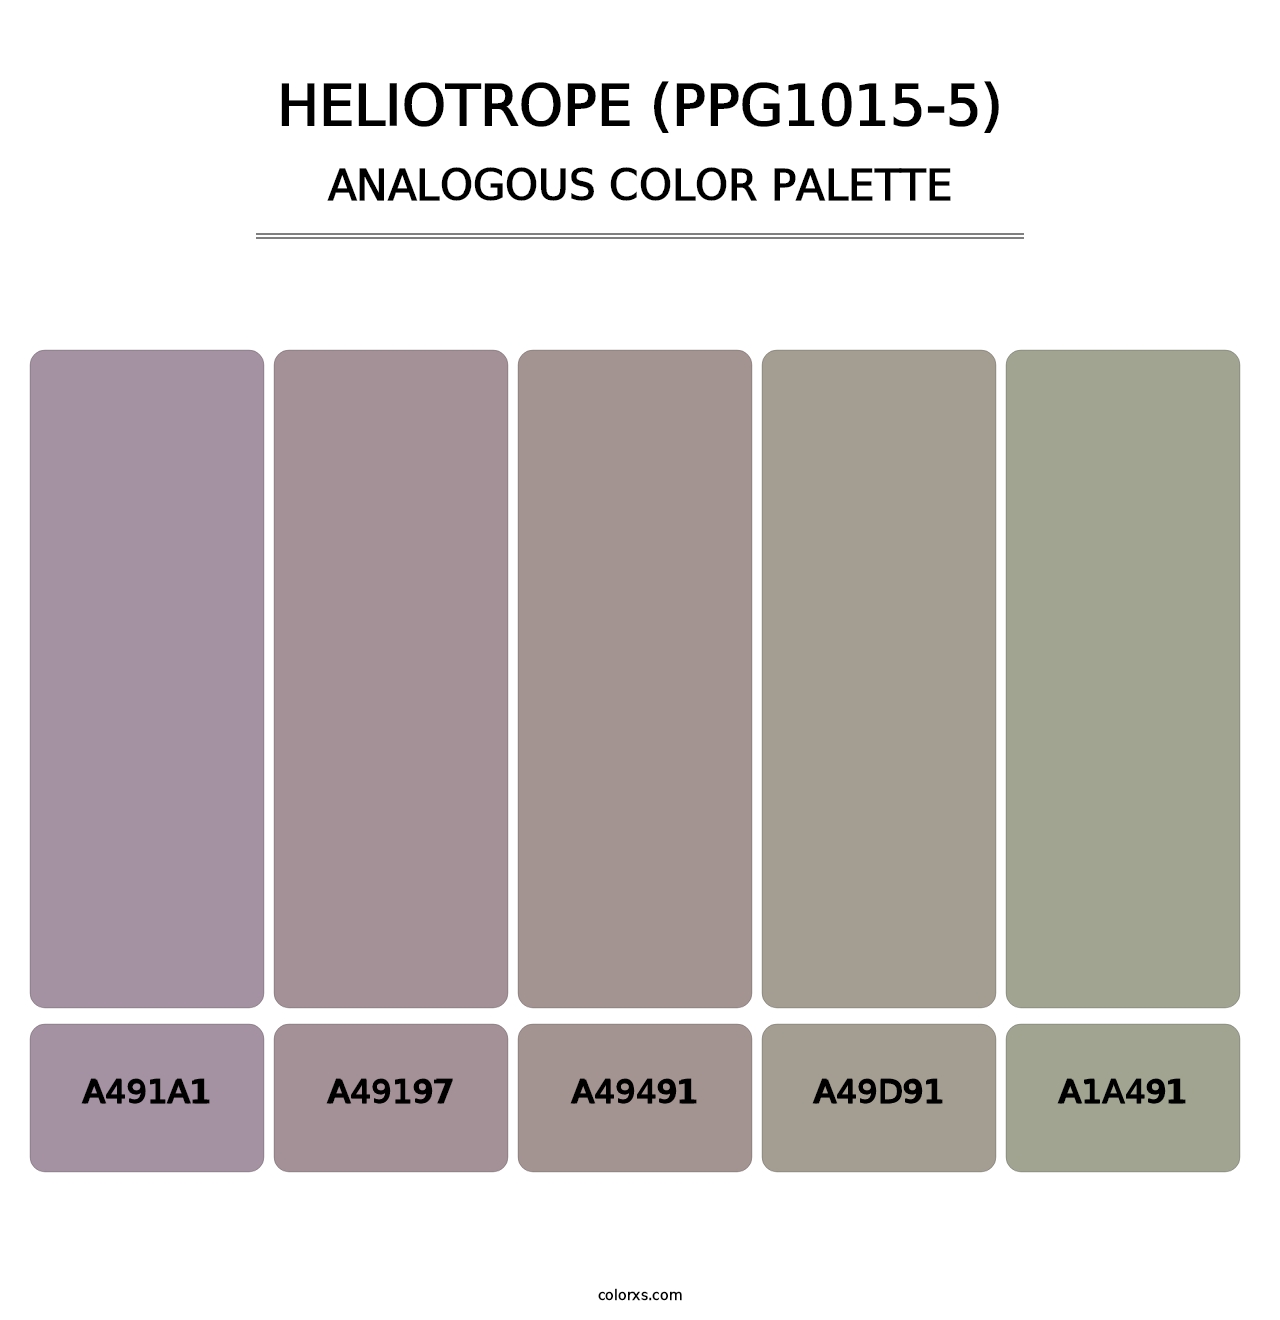 Heliotrope (PPG1015-5) - Analogous Color Palette